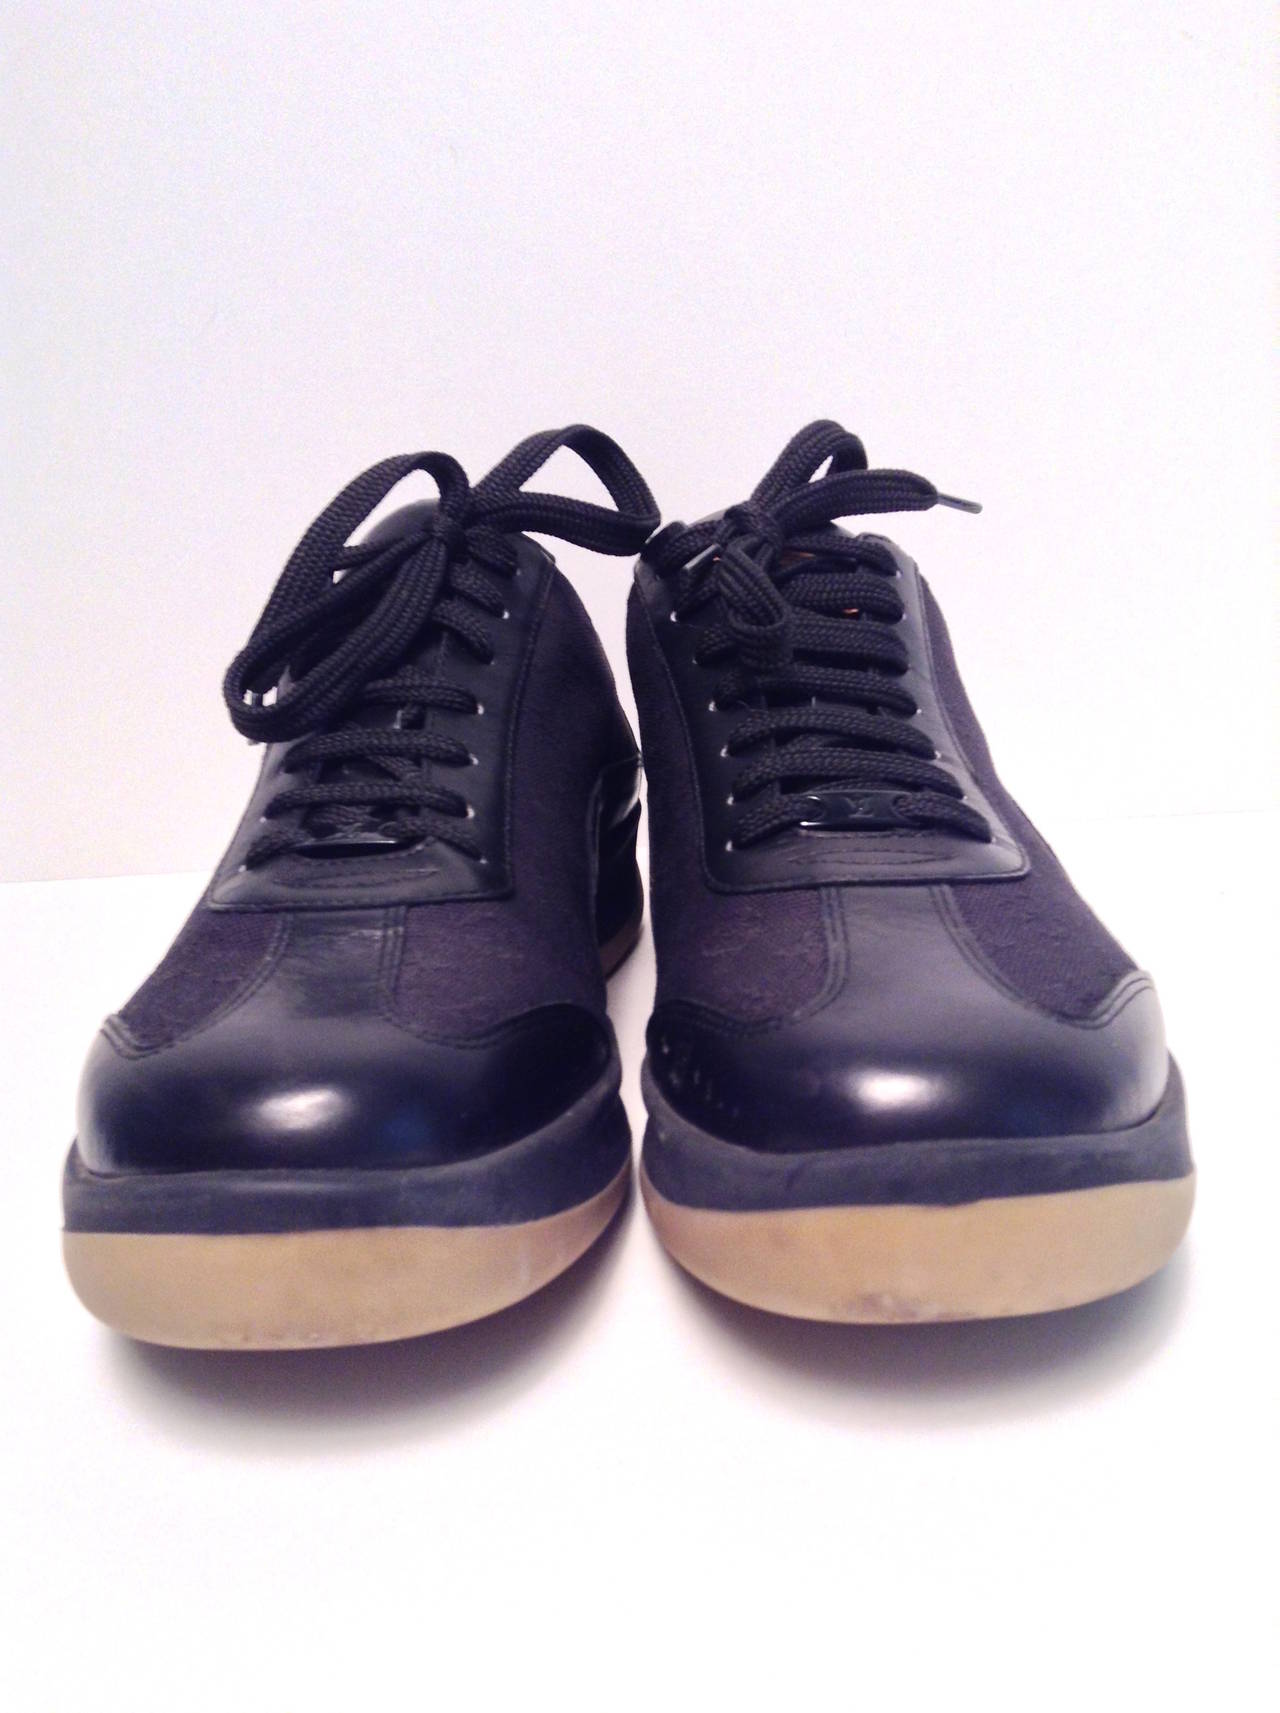 Louis Vuitton Black Monogram Sneakers Size 40 2